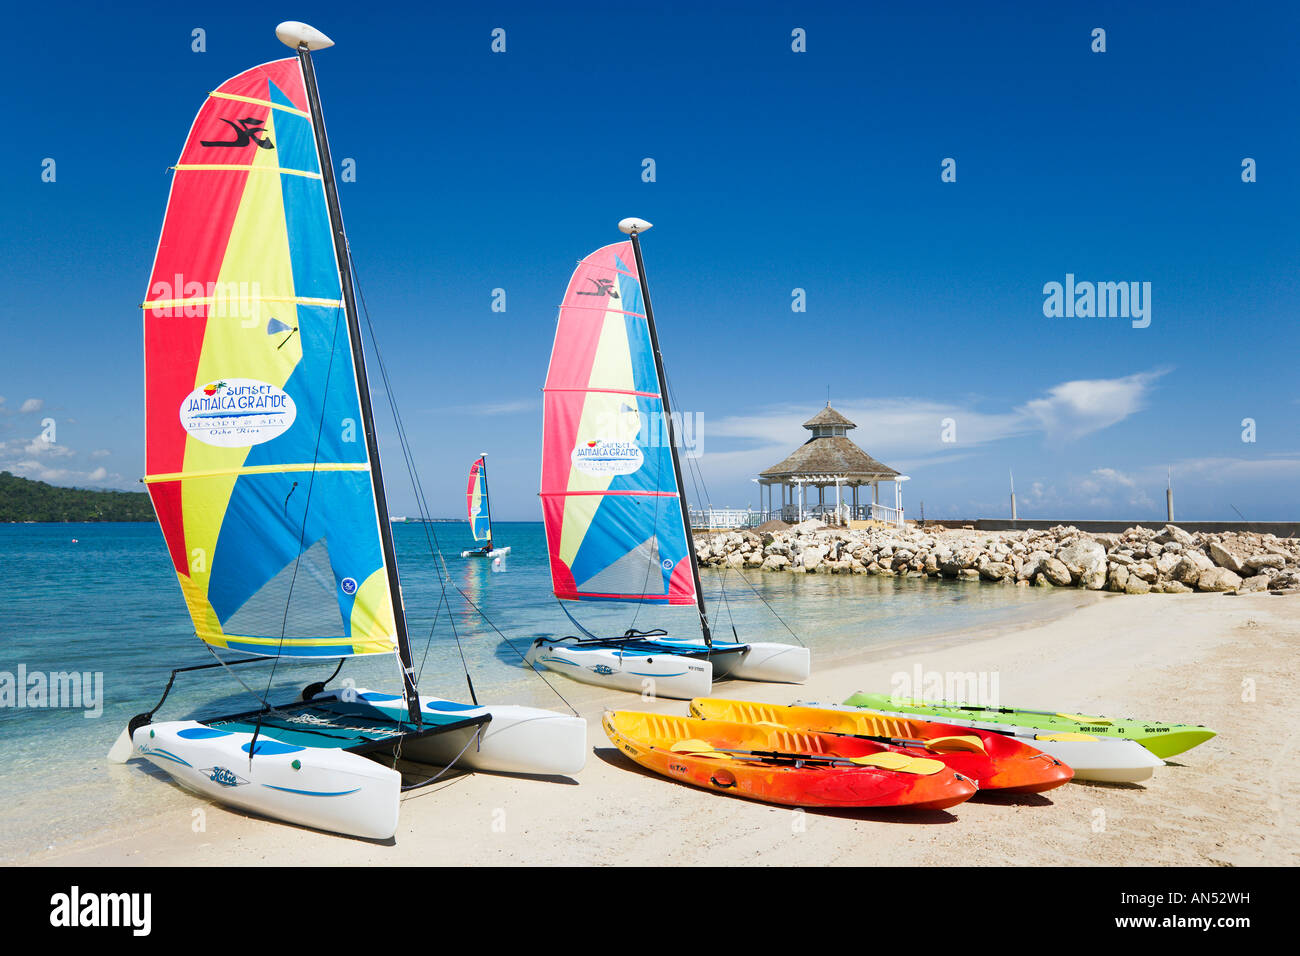 Spiaggia all'esterno 'Sunset Giamaica Grande' Hotel, Ocho Rios Bay, Ocho Rios, in Giamaica, Caraibi, West Indies Foto Stock